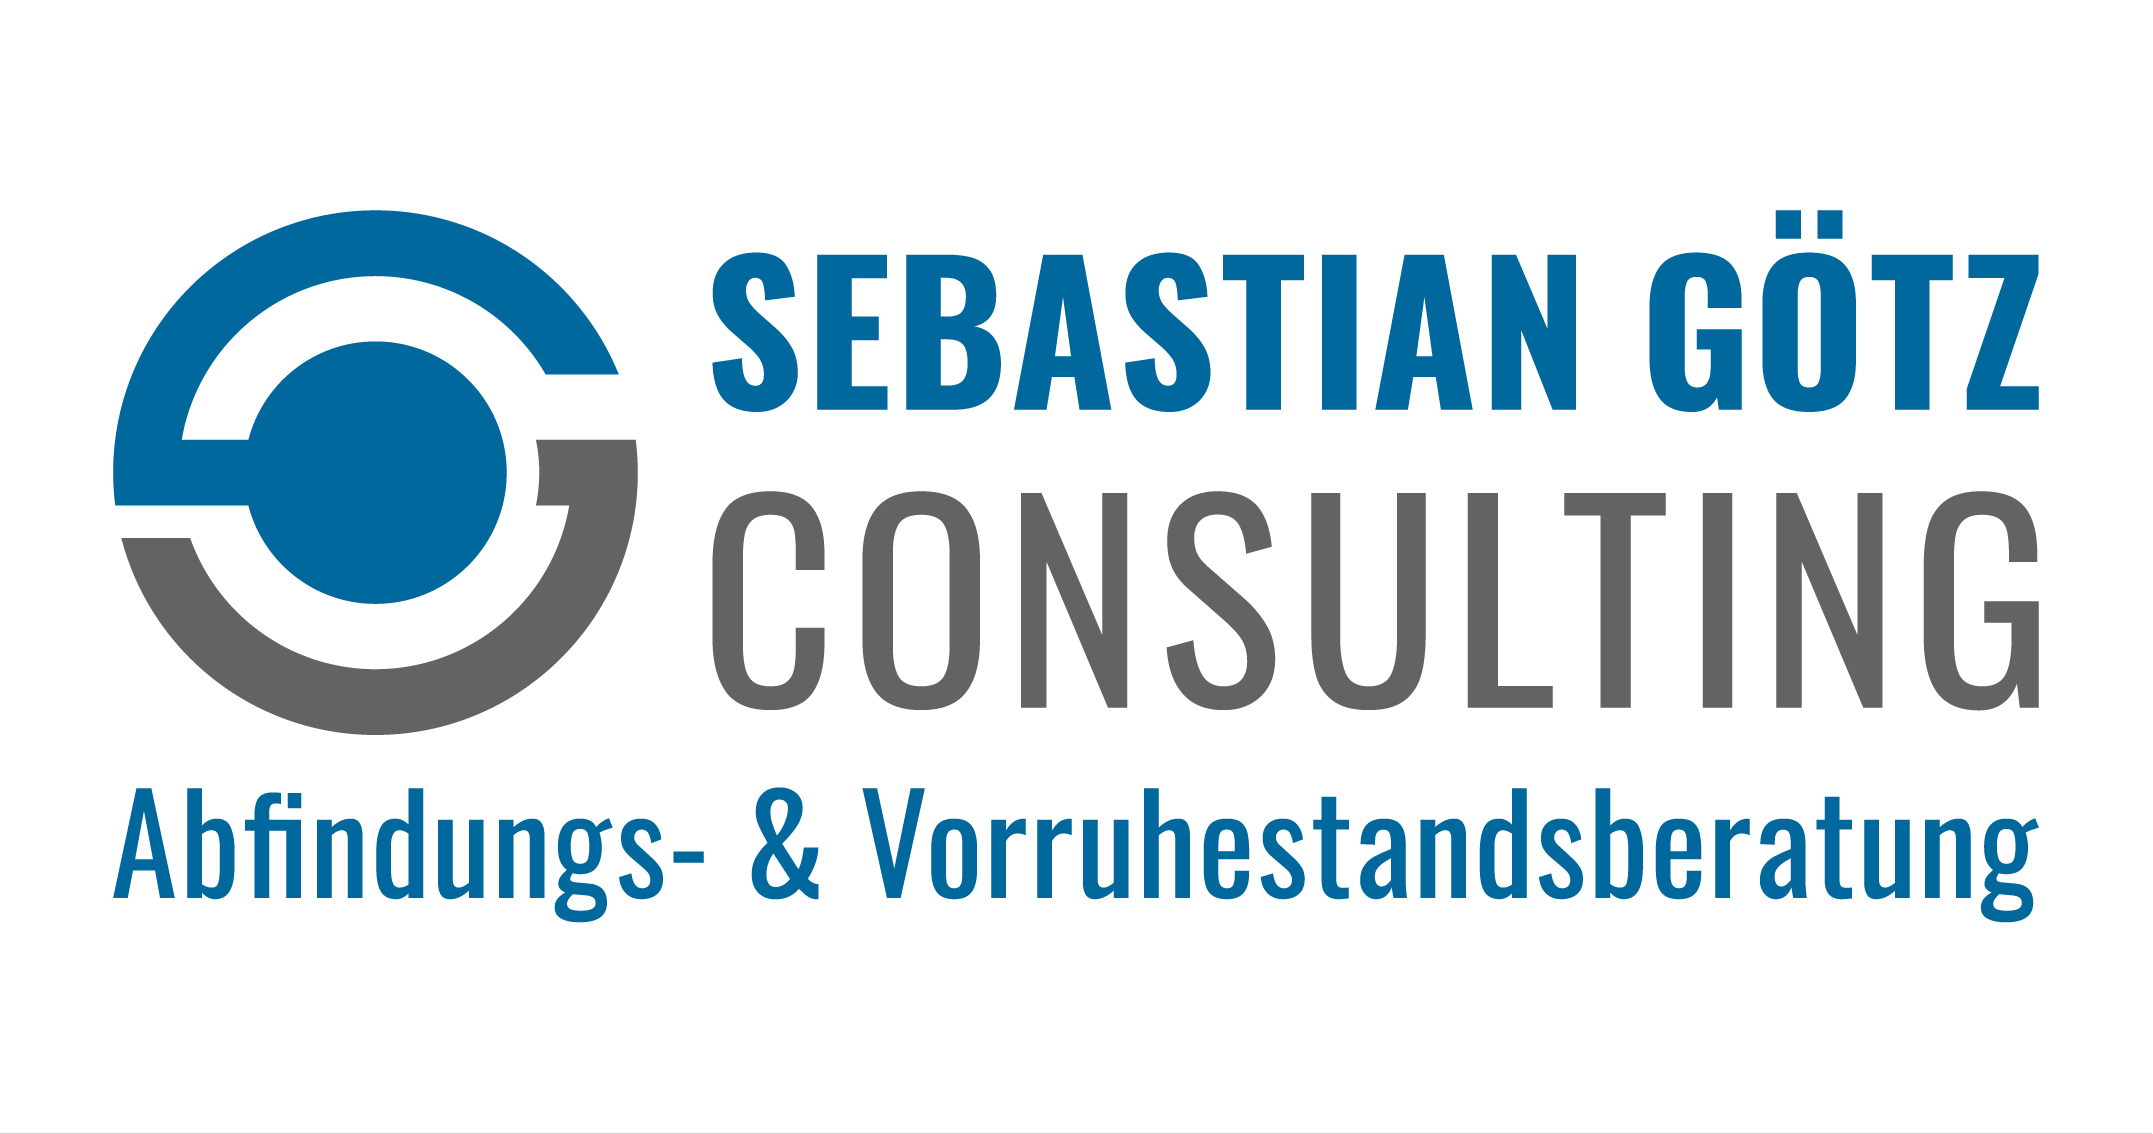 Sebastian Götz Consulting